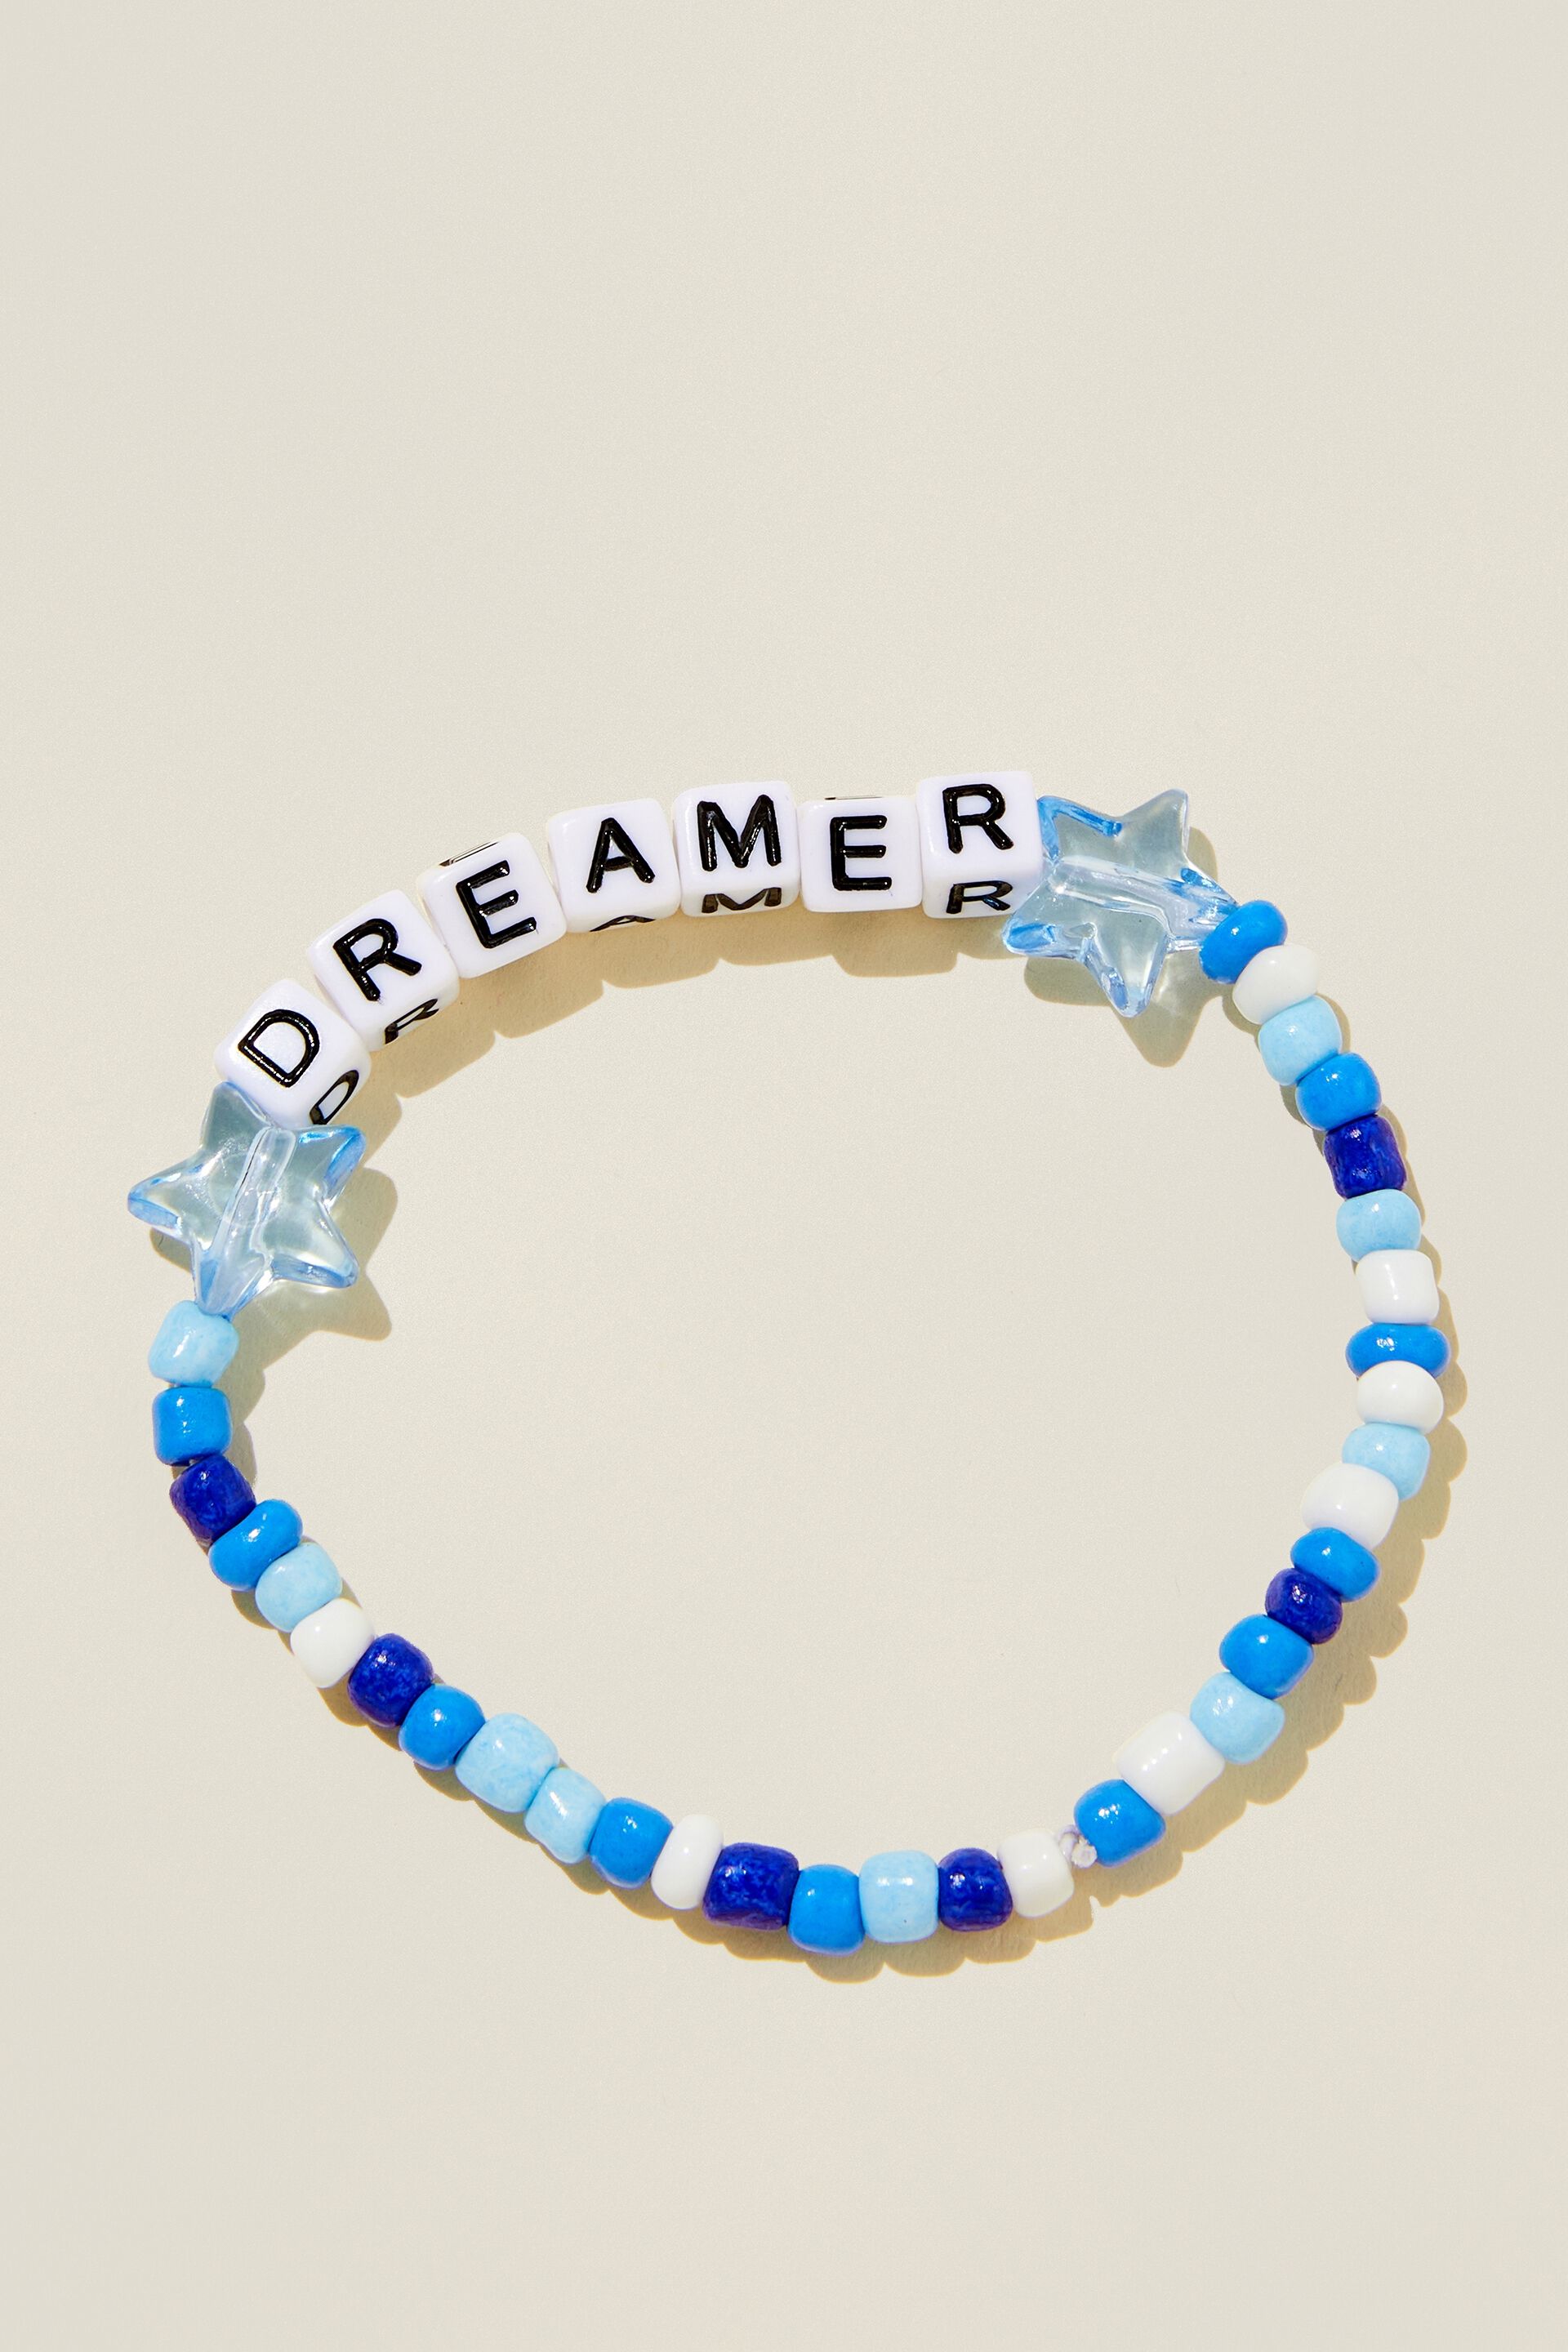 Dreamer Wish Bracelet Craft Kit by Creatology™ | Michaels